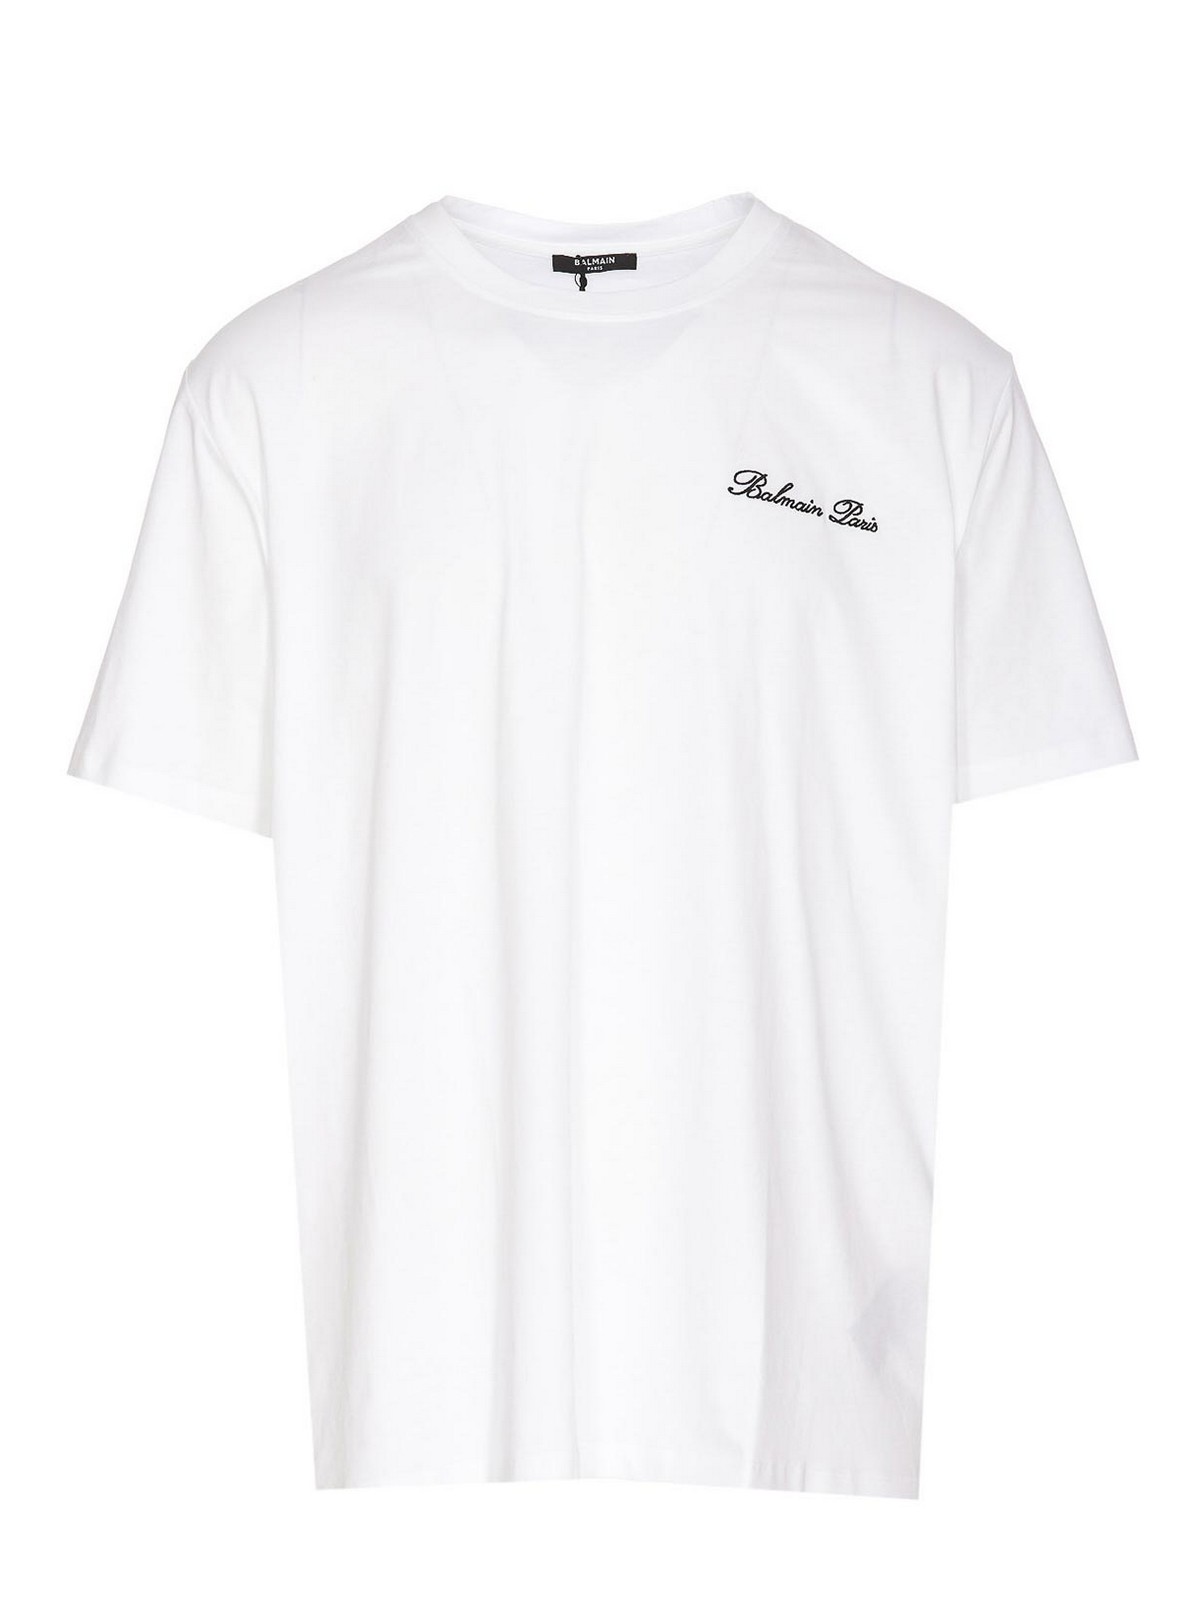 Balmain White T-shirt Frontal Embroidered Logo